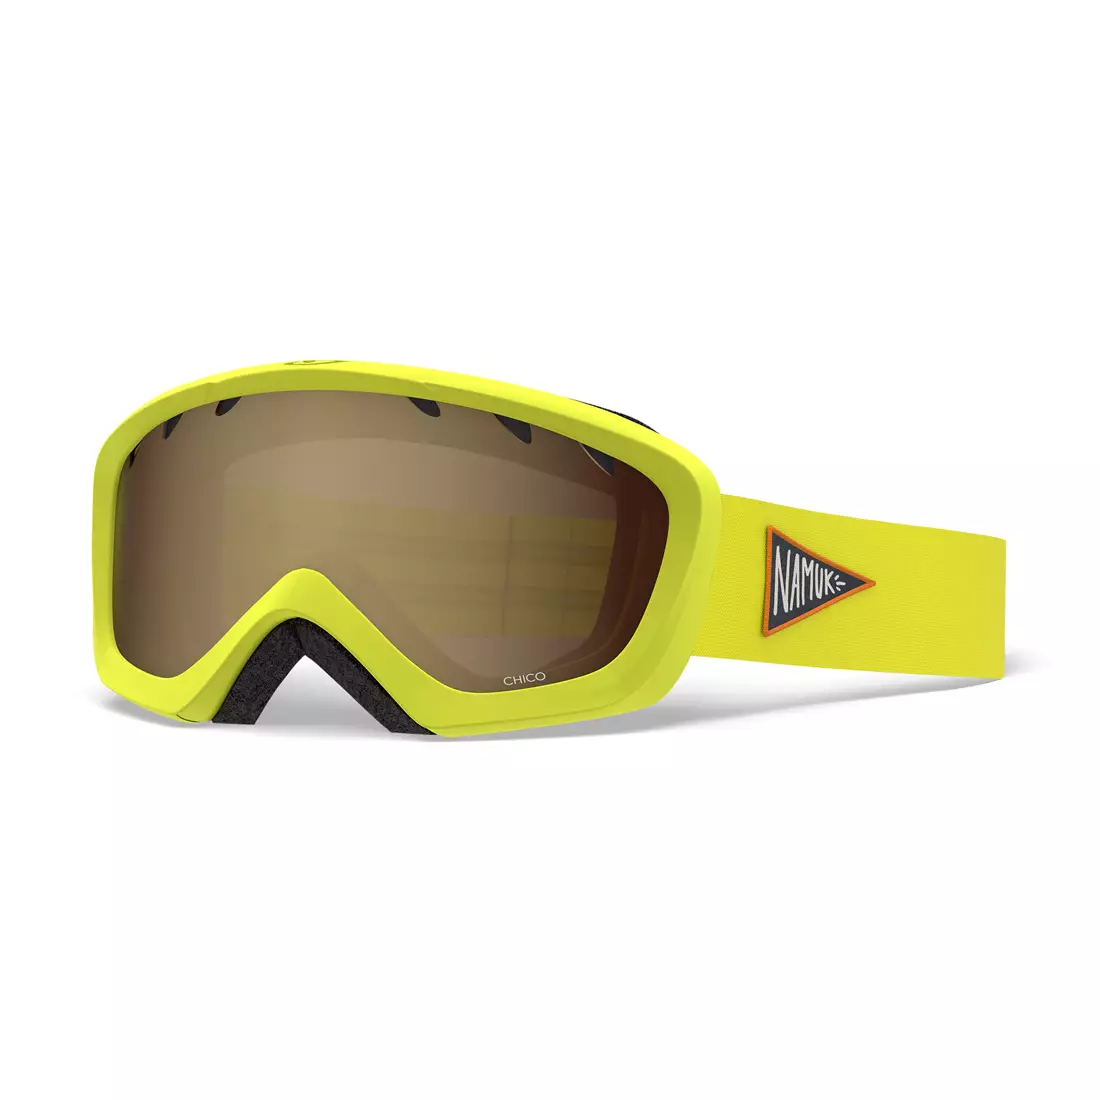 Junior Ski-/Snowboardbrille CHICO NAMUK YELLOW GR-7105420